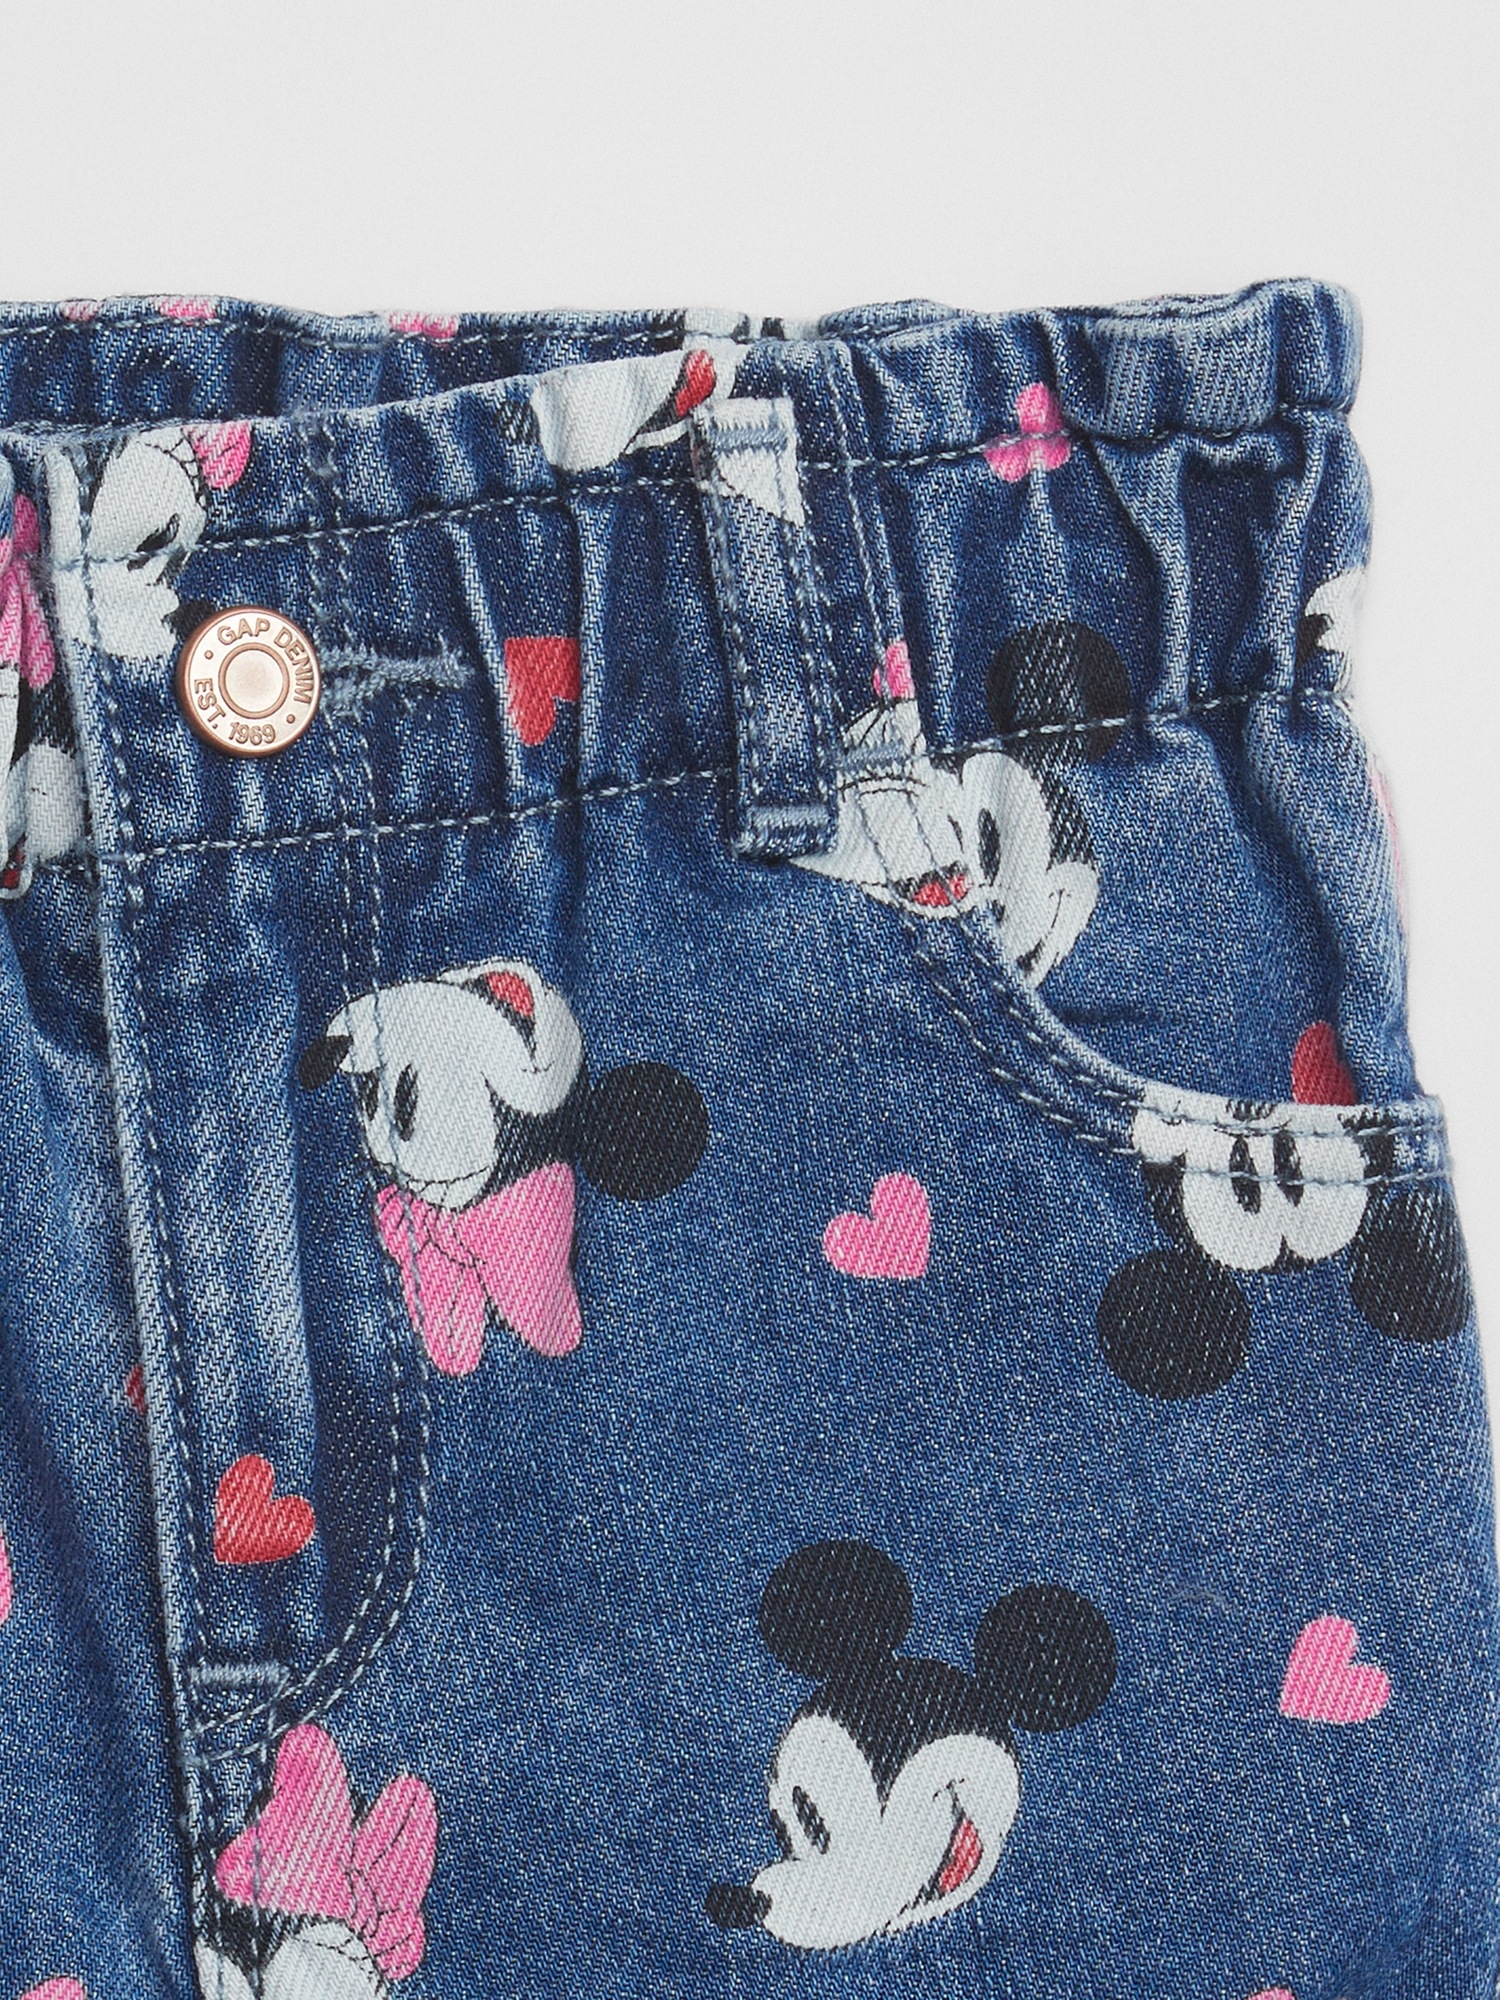 Buy Gap Disney Fleece-Lined Just Like Mom Jeans from the Gap